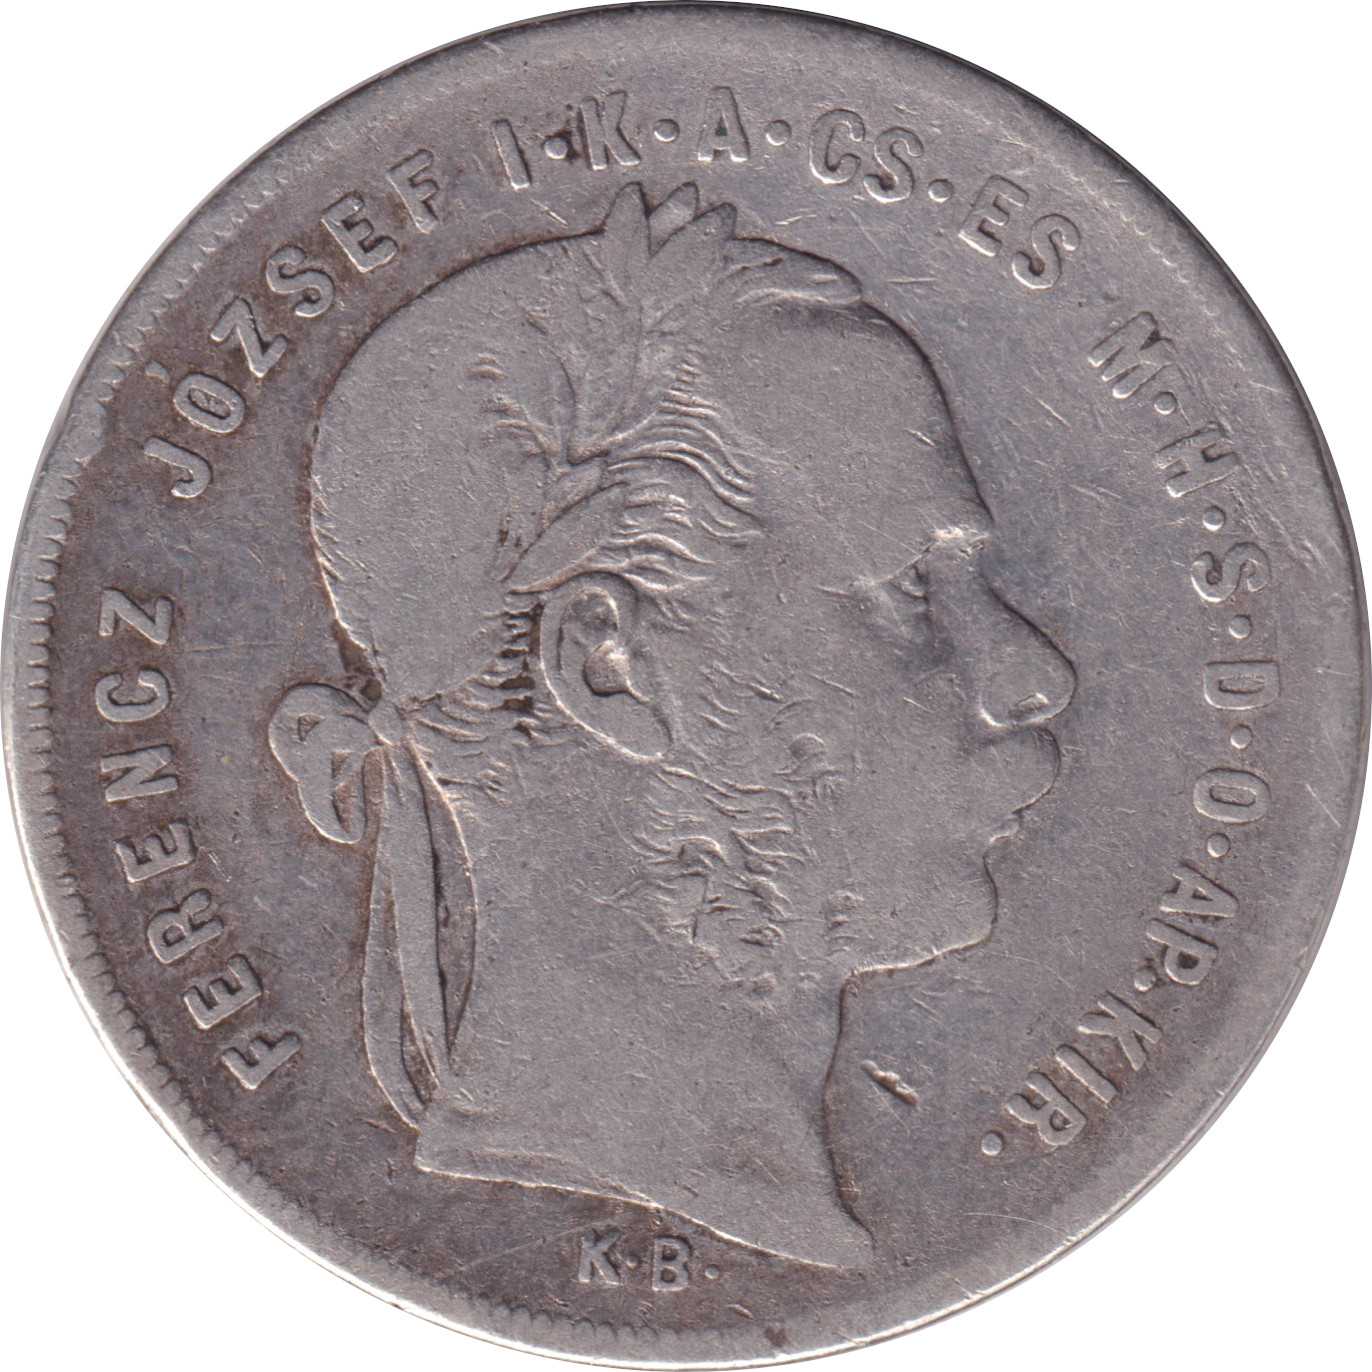 1 forint - François Joseph I - Première effigie - Grand blason